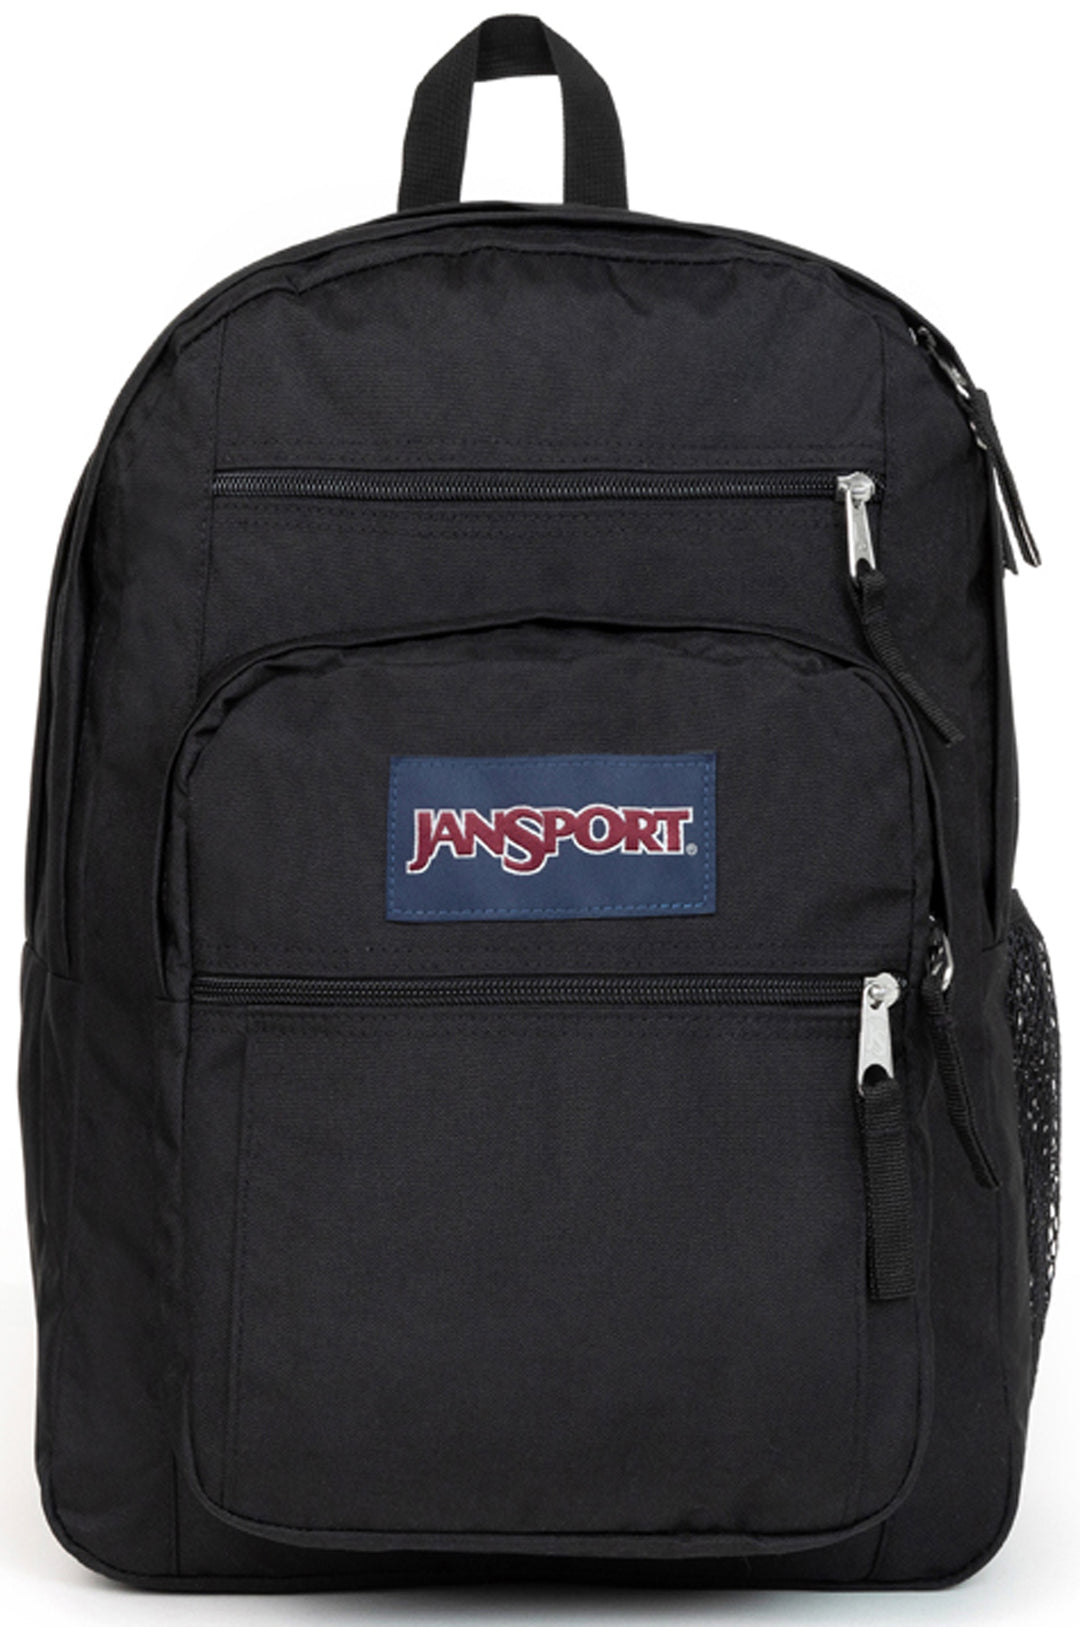 In – Jansport 4feetshoes Backpack Black Big Student